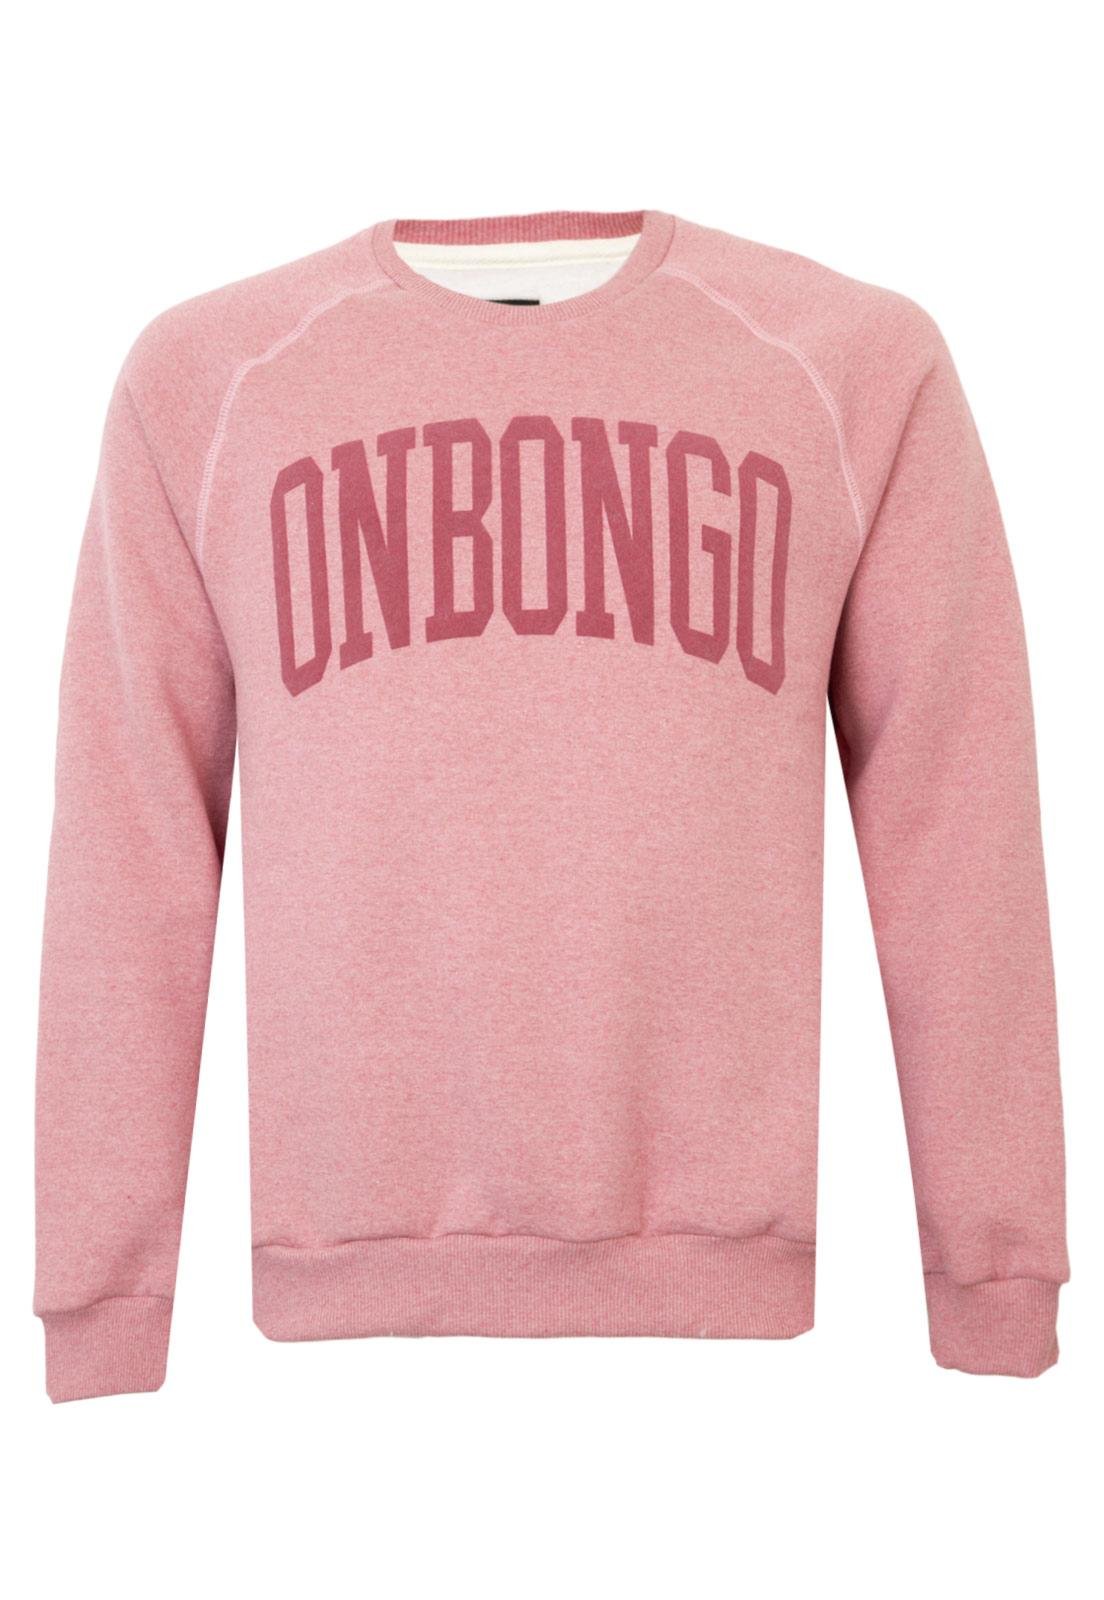 blusa de frio da onbongo